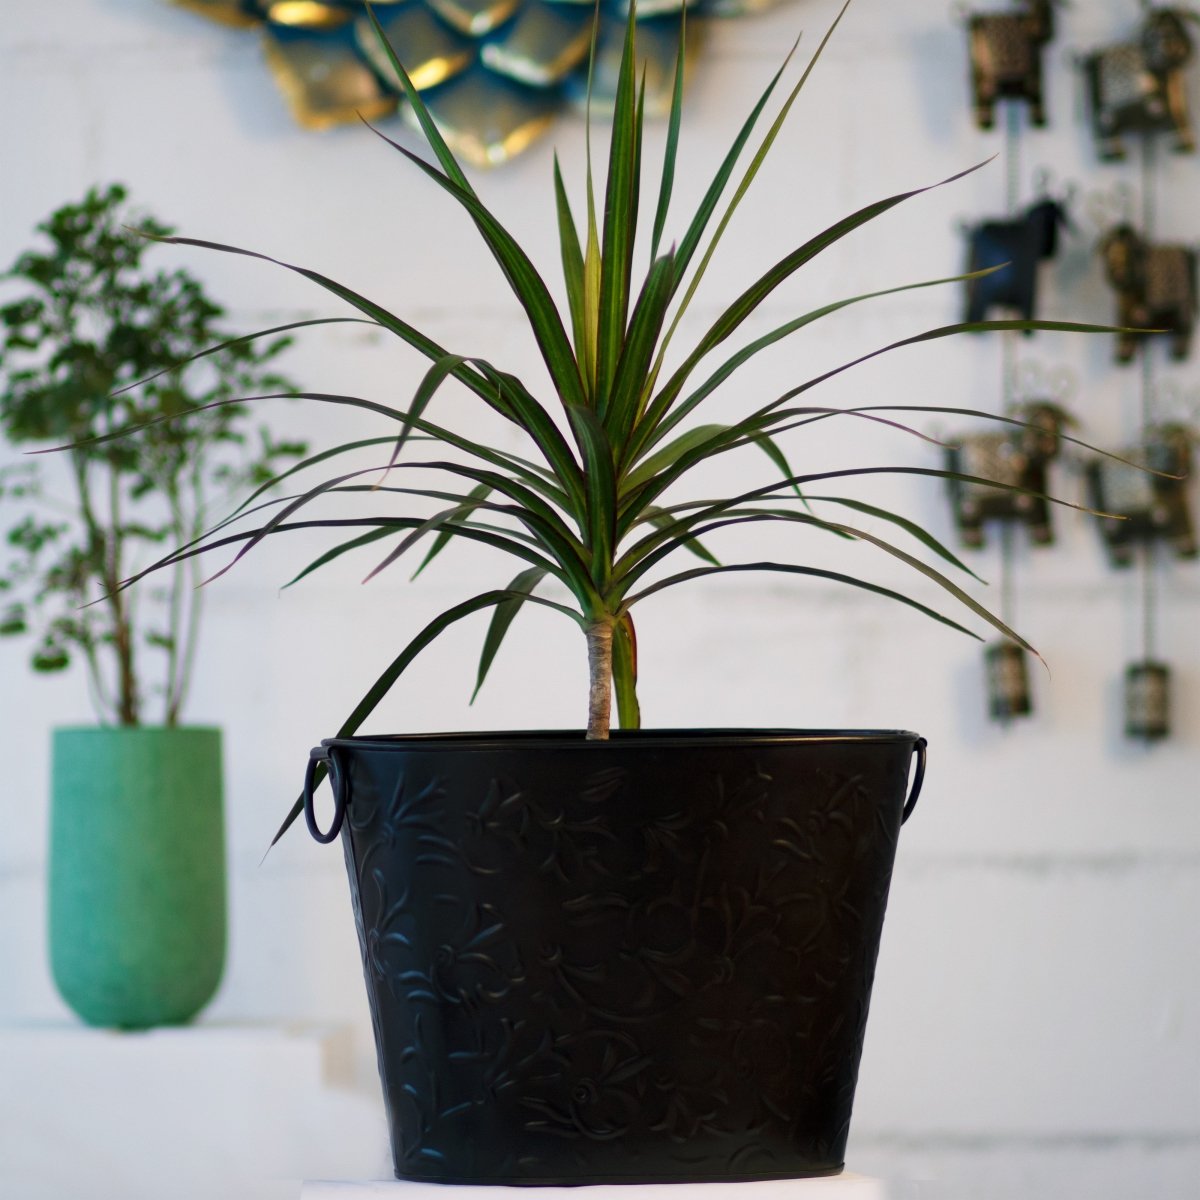 Kezevel Decorative Metal Planter - Dark Brown Indoor Planters in Embossed Floral Design, Bucket Shaped Flower Pot Home Decor